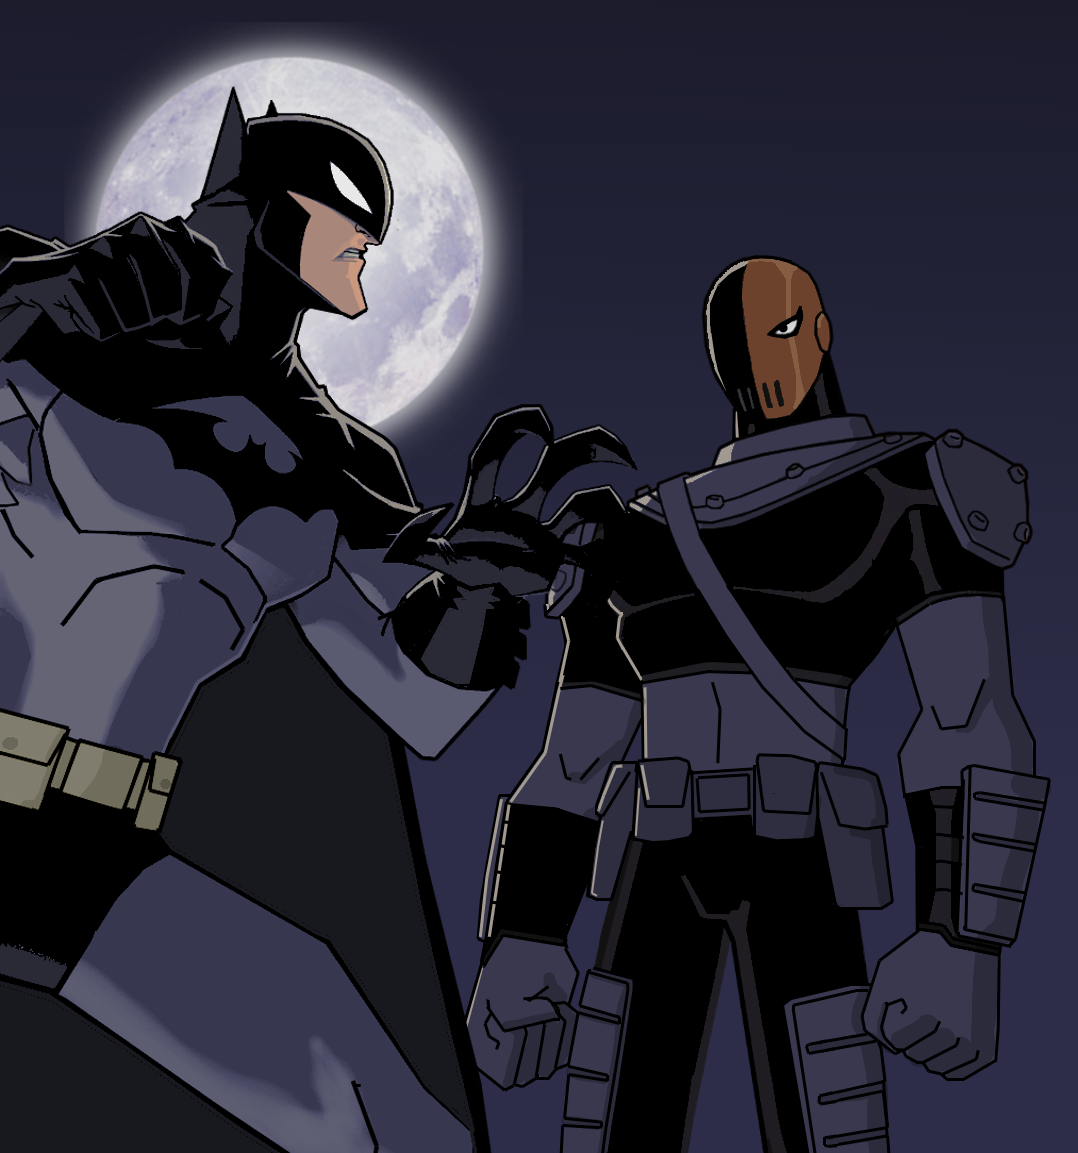 The Batman VS Slade by xraydro99 on DeviantArt